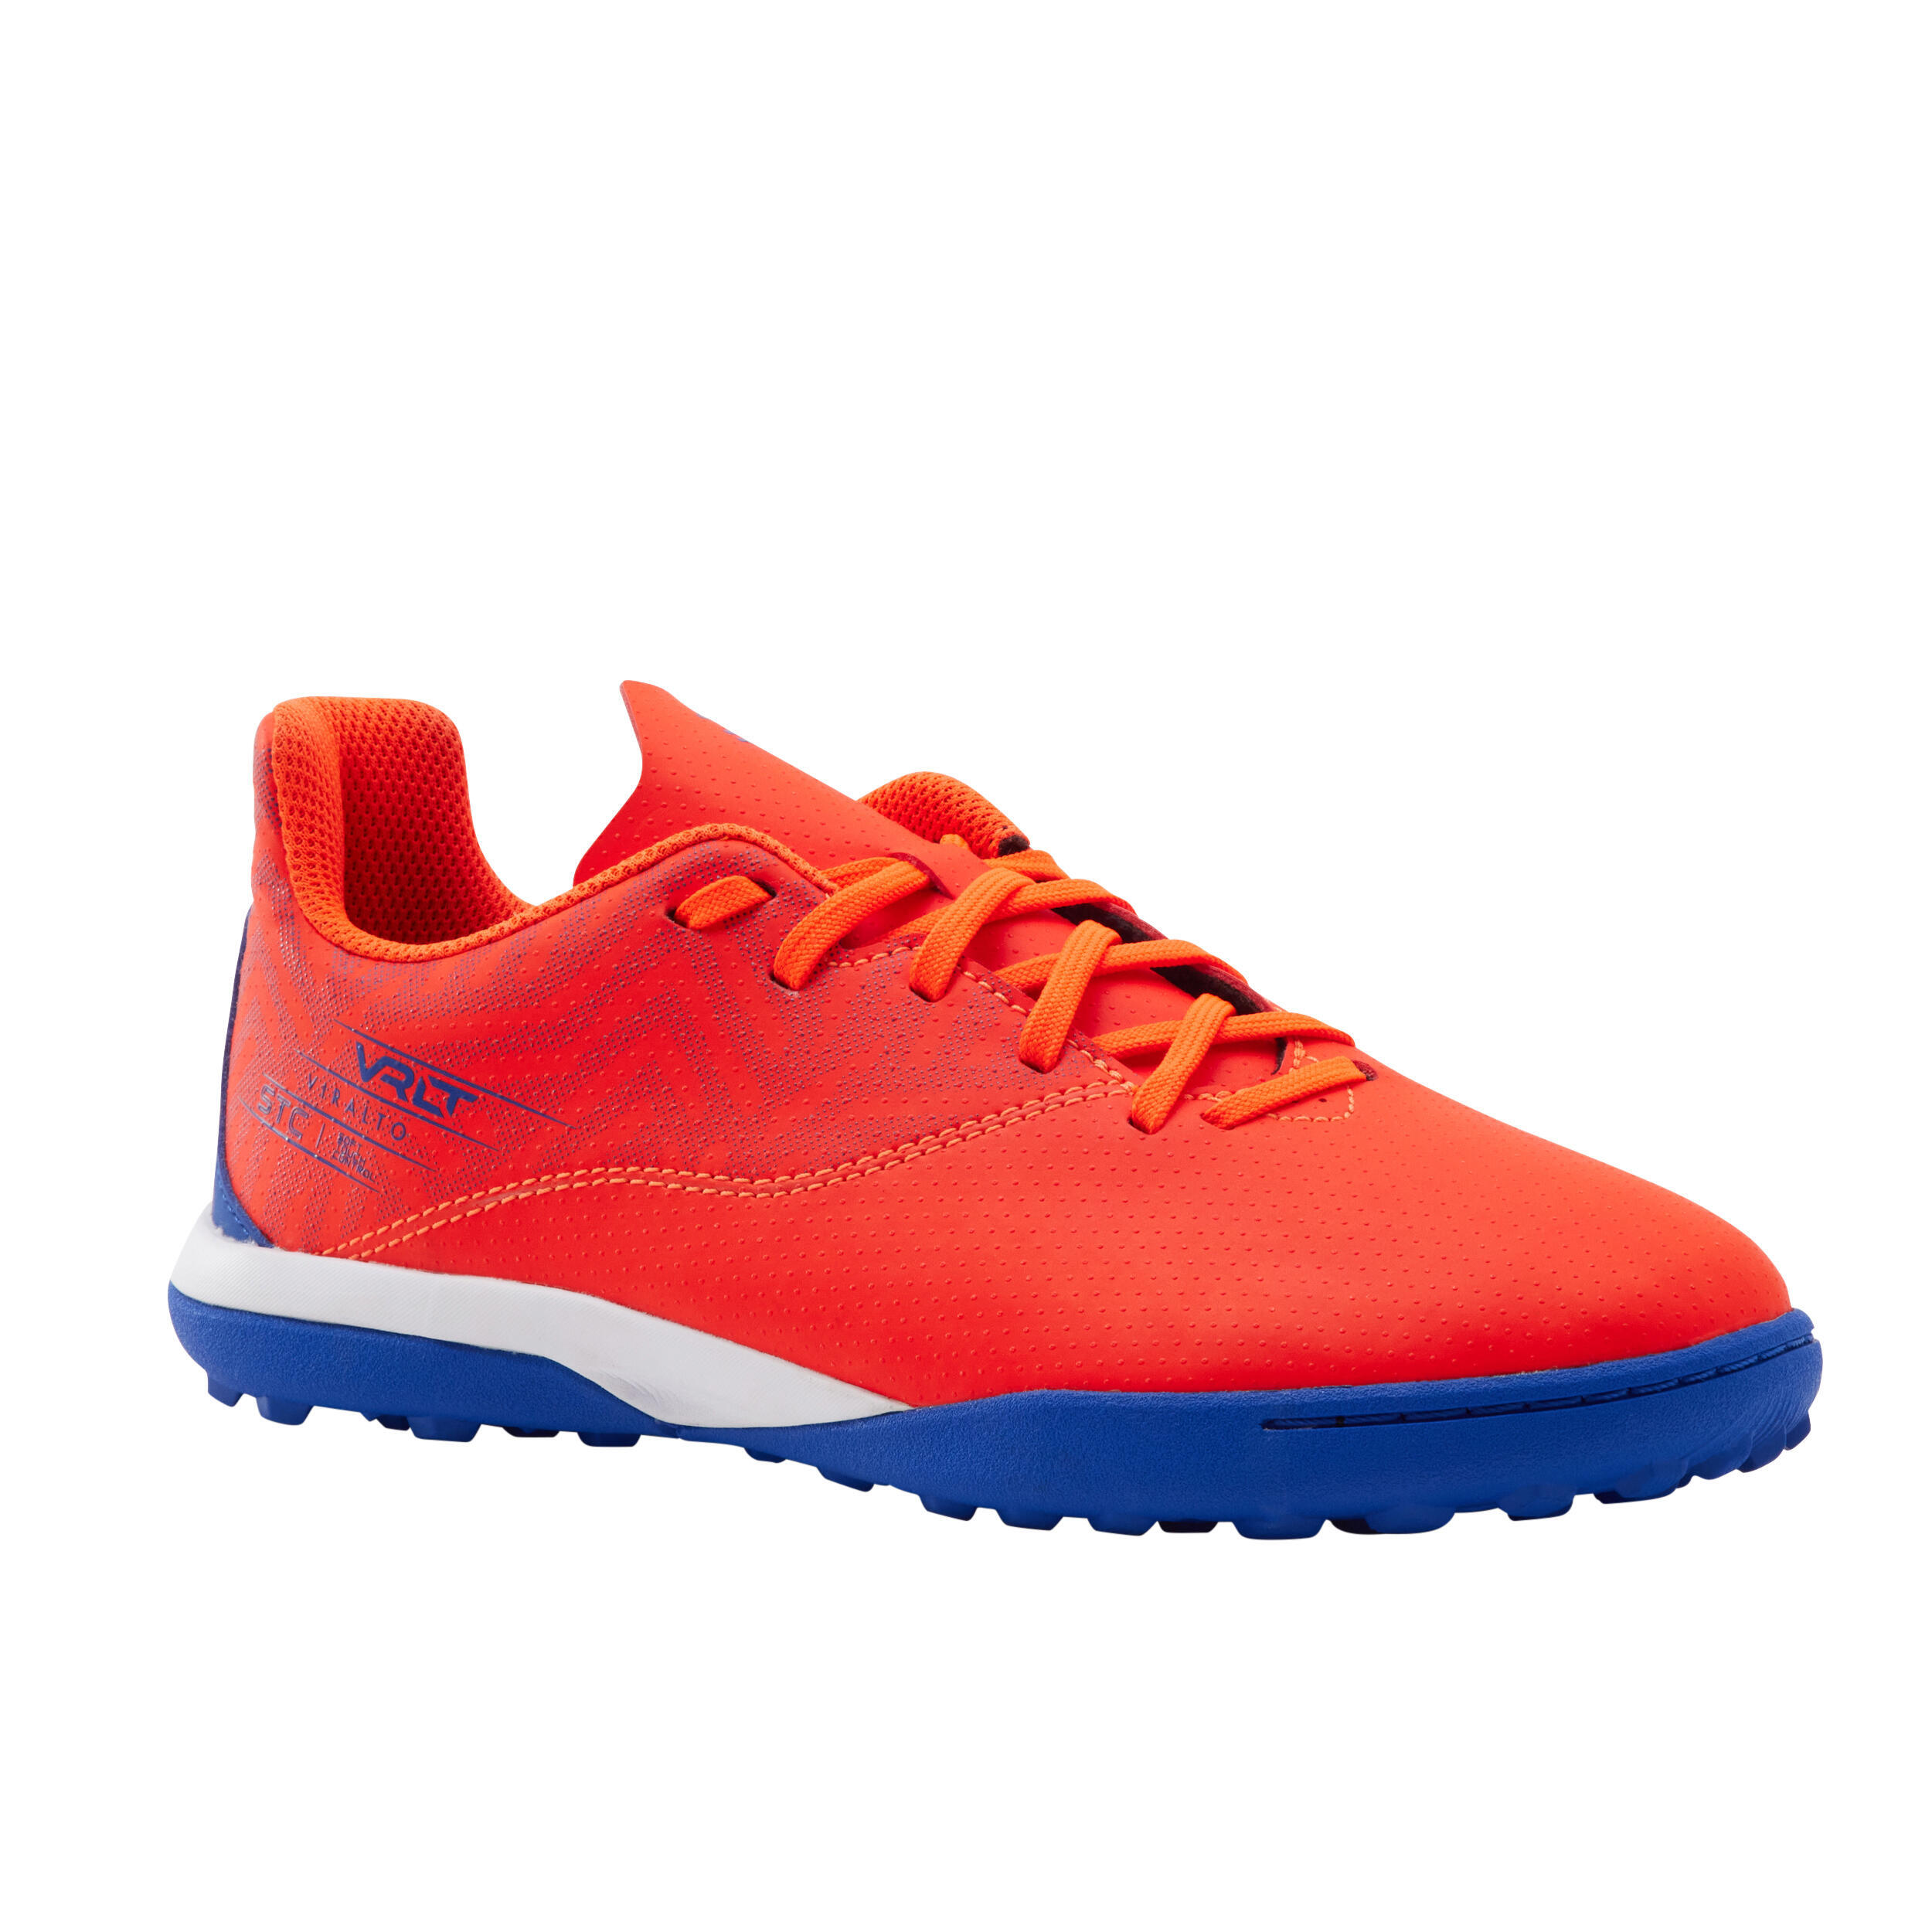 Kids' Lace-Up Football Boots Viralto I Turf TF - Orange/Blue 1/8